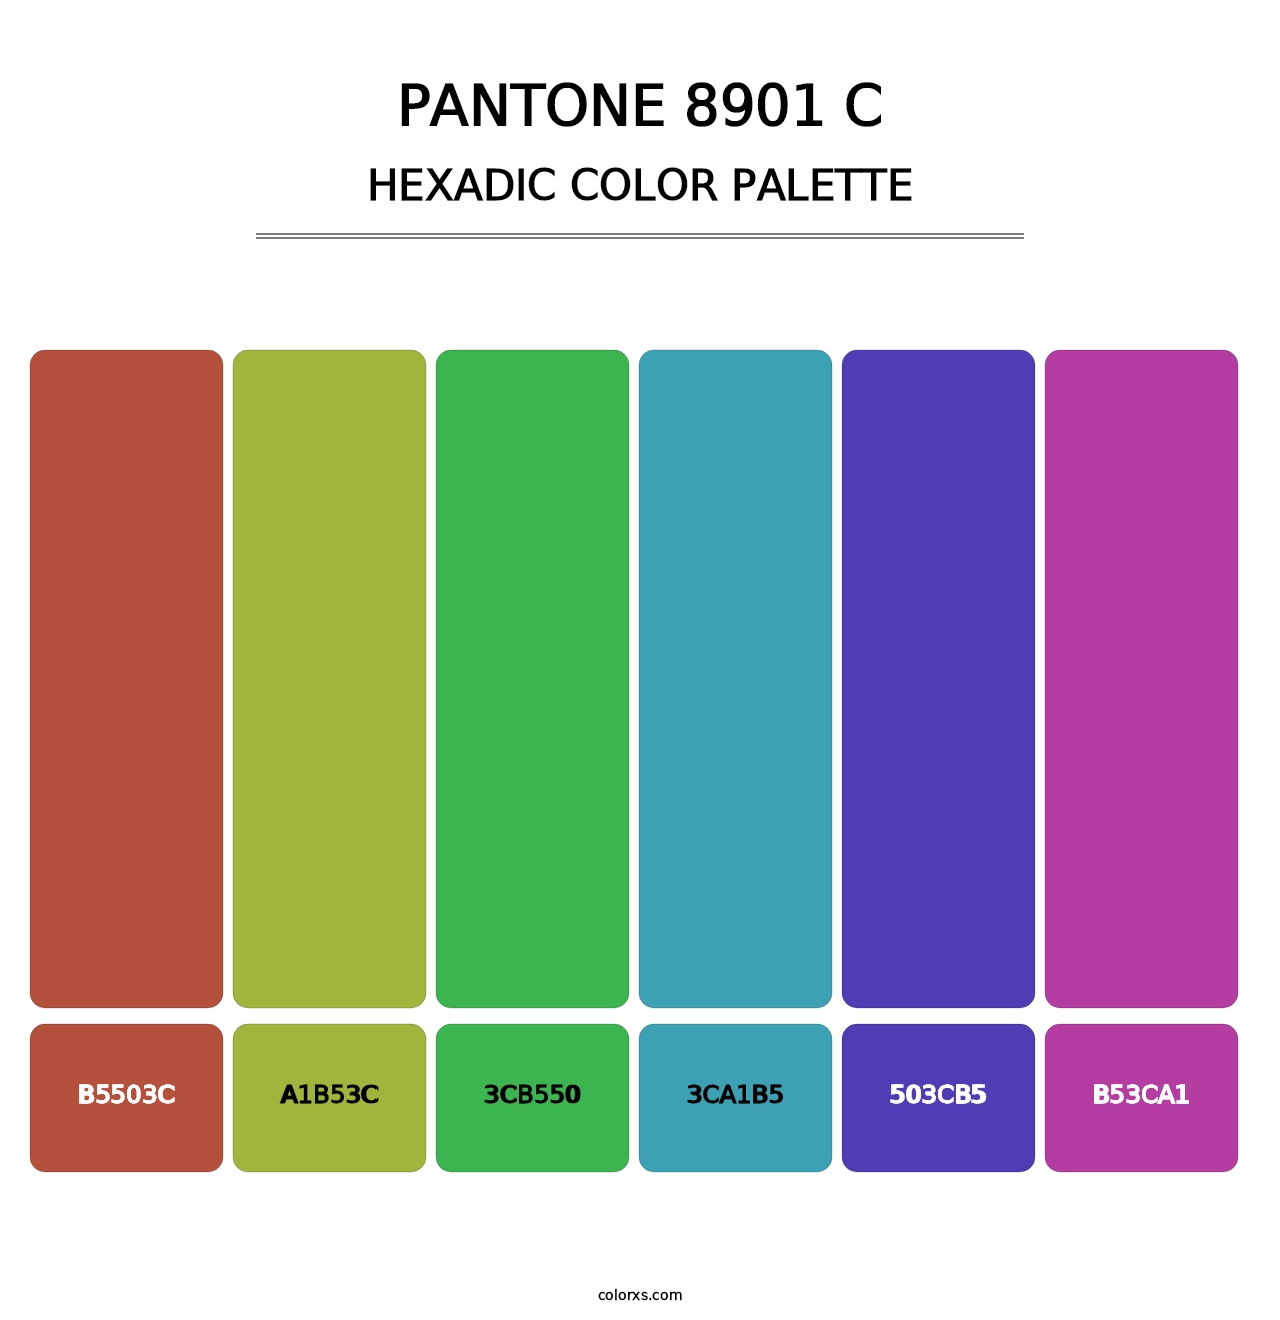 PANTONE 8901 C - Hexadic Color Palette